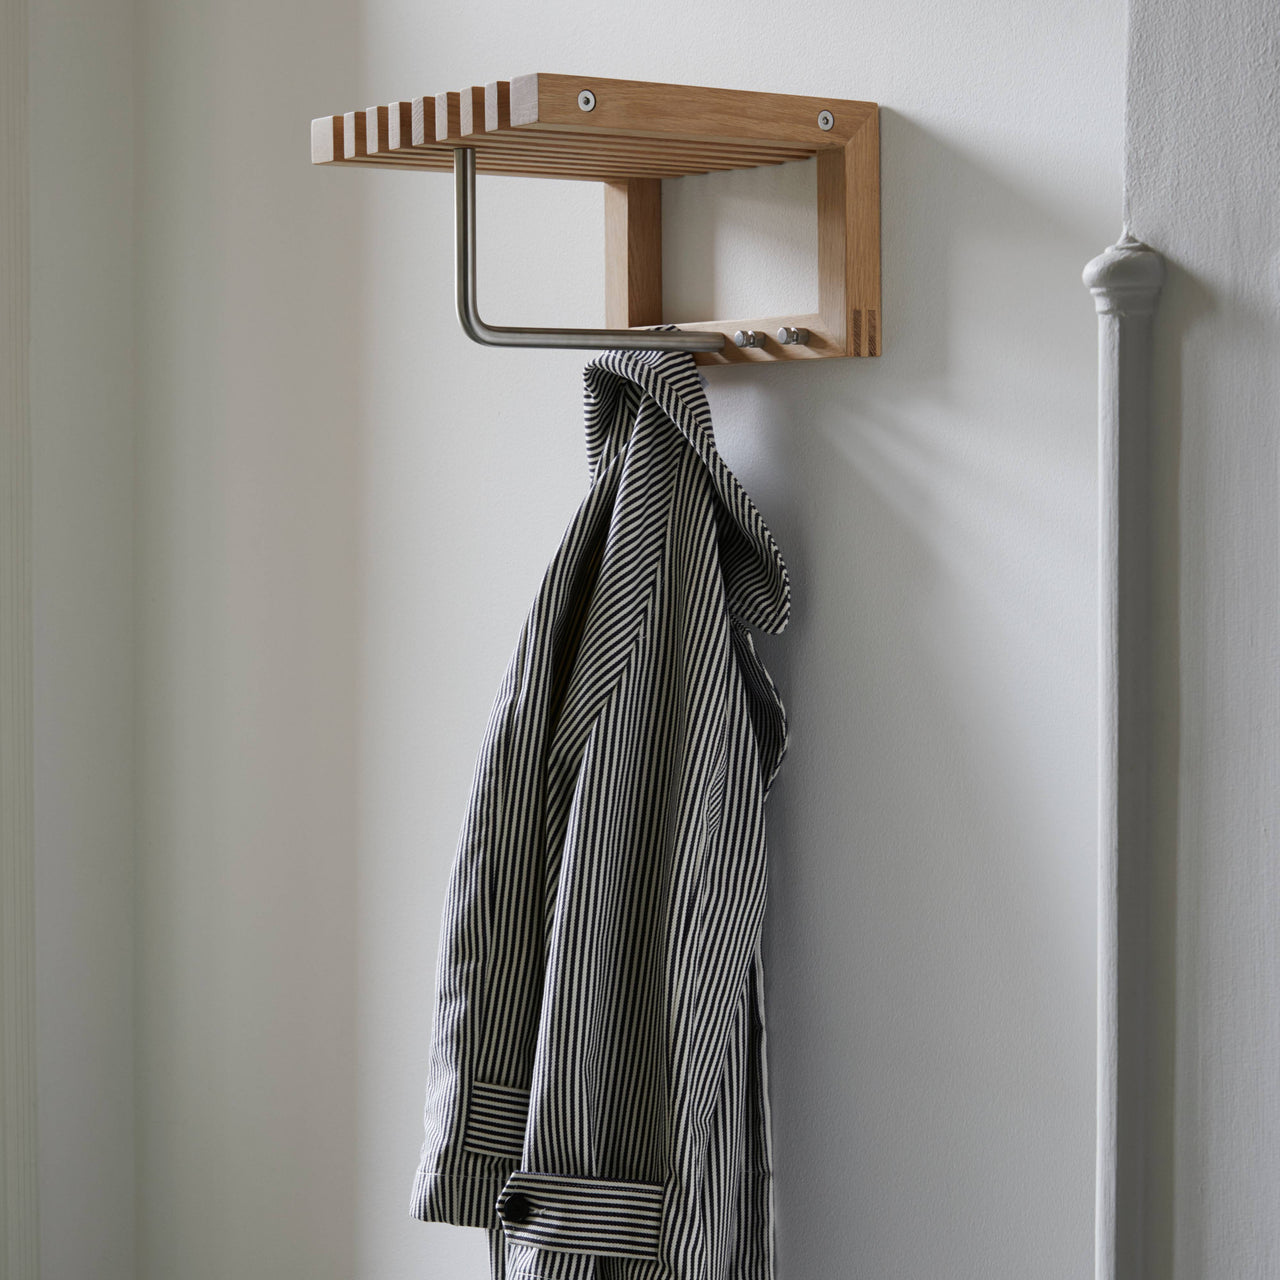 Cutter Mini Wardrobe | Buy Skagerak by Fritz Hansen online at A+R